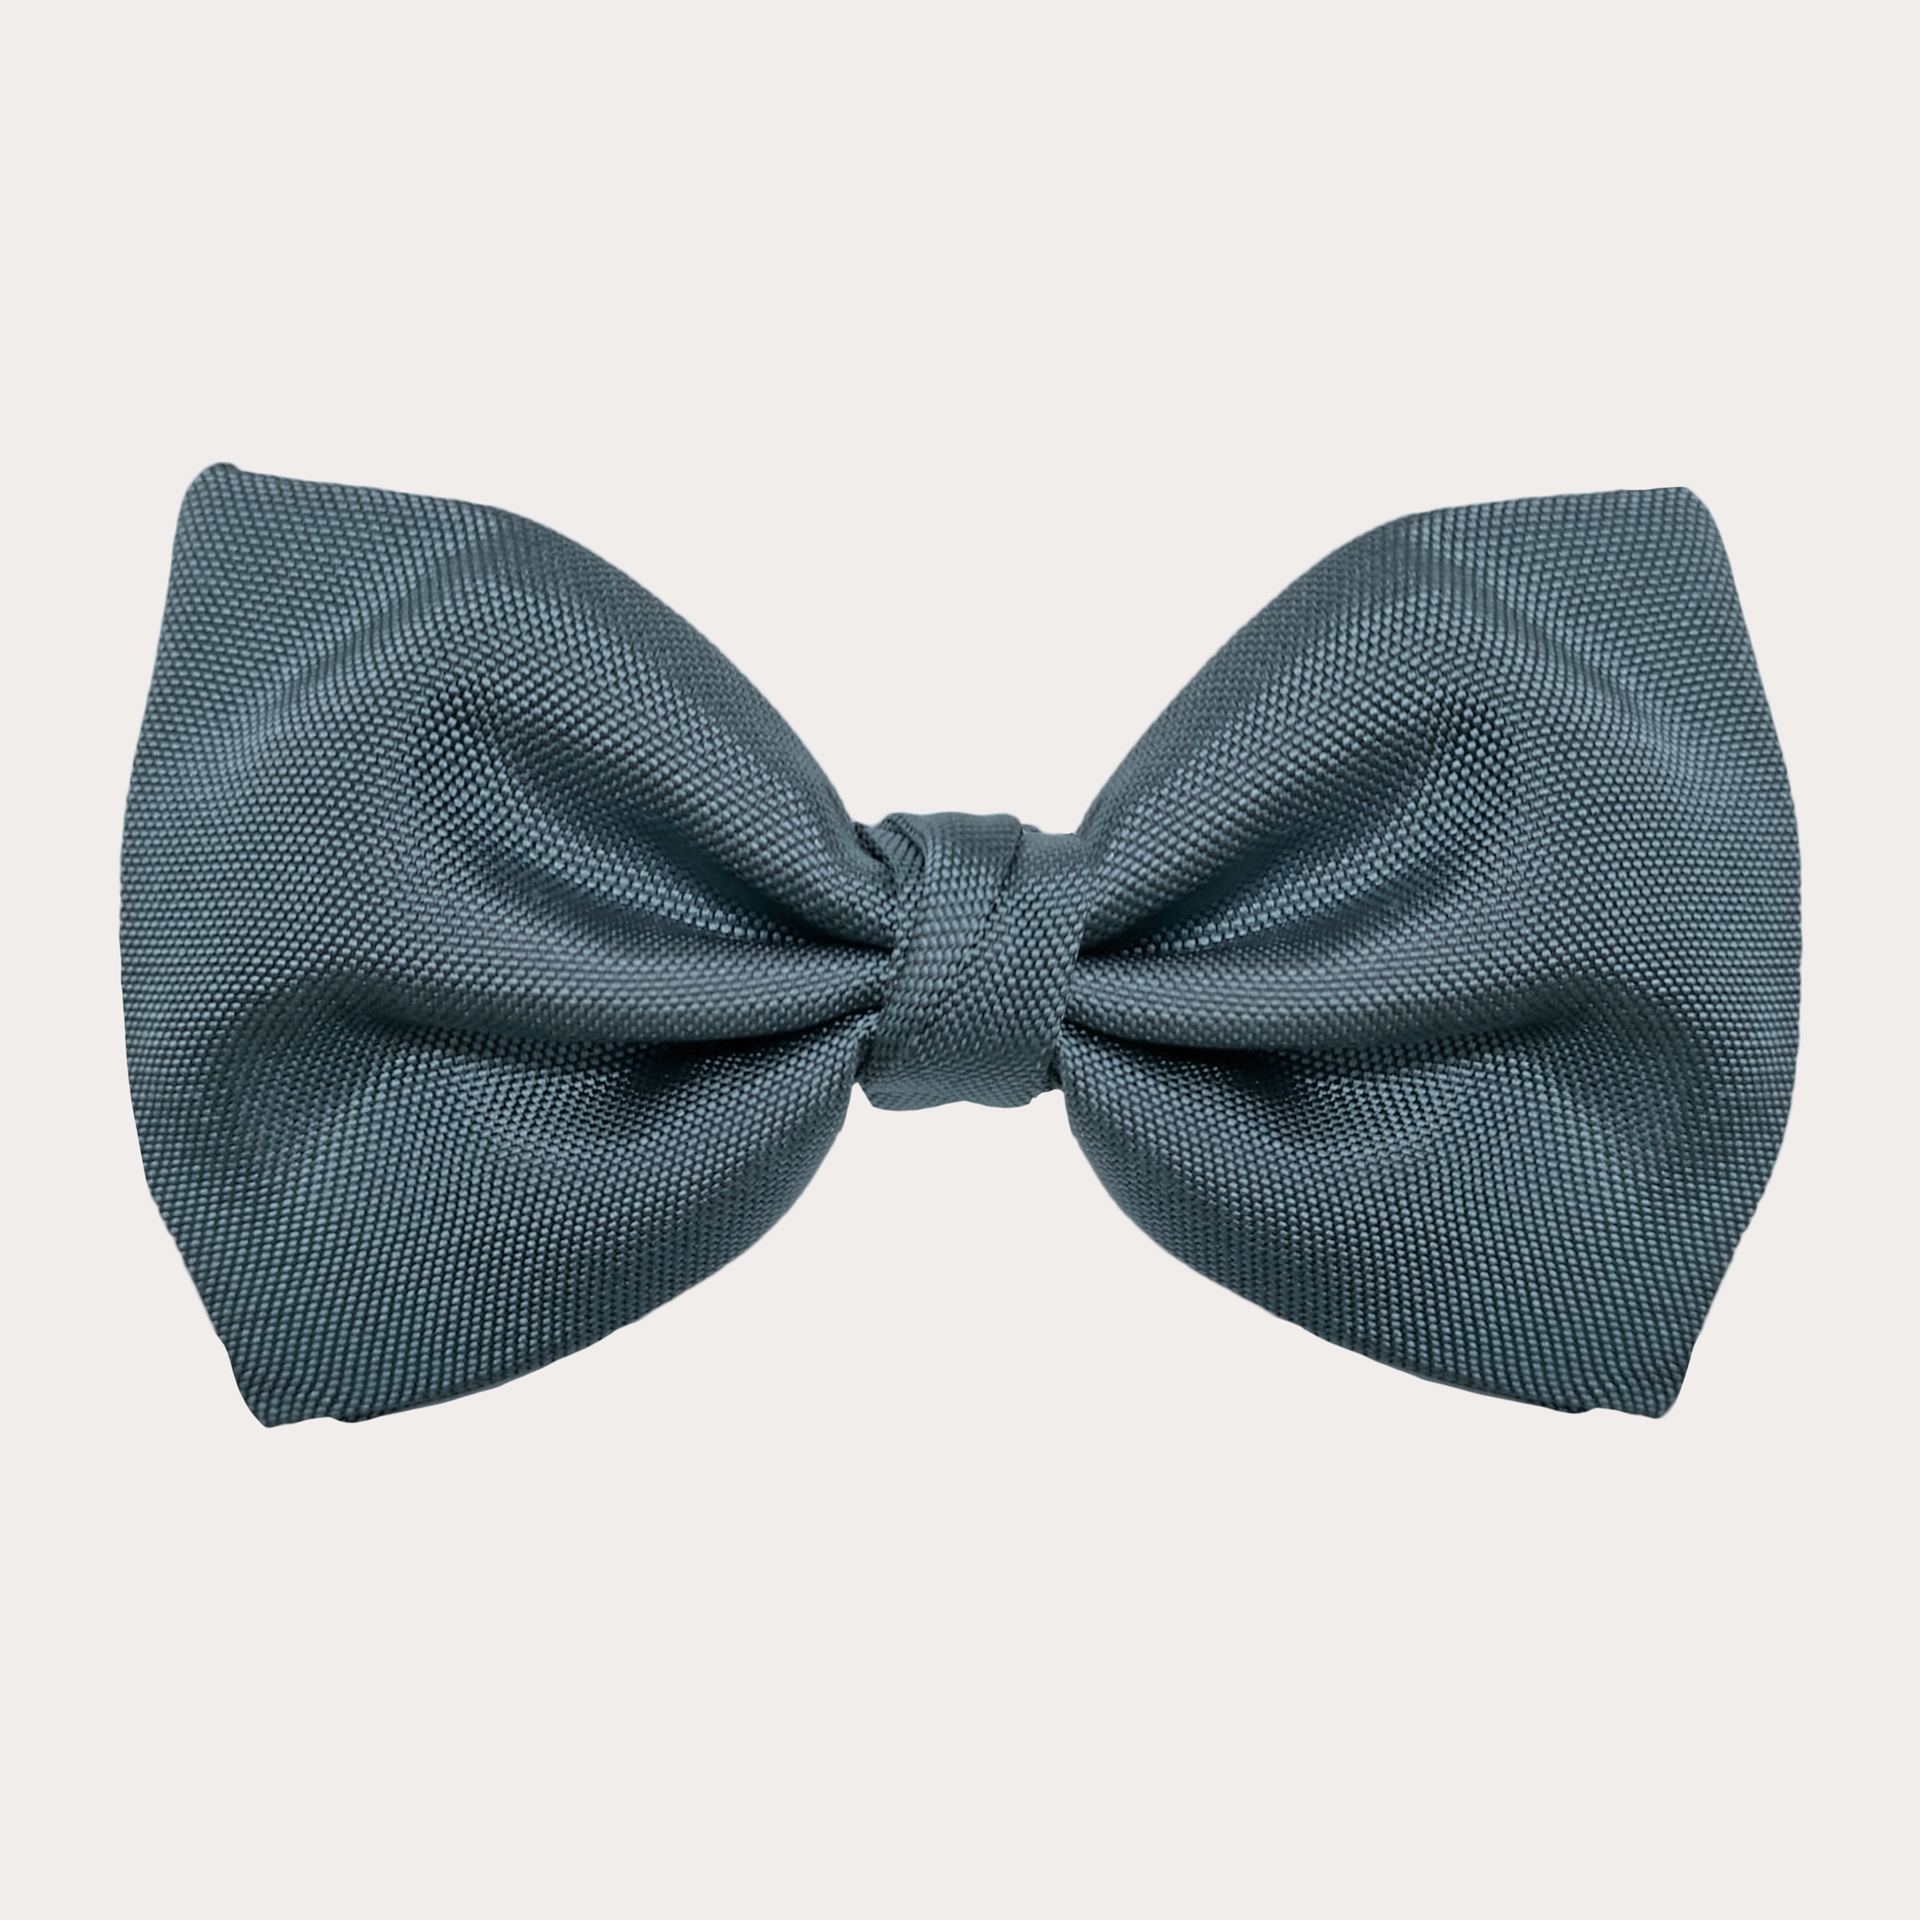 BRUCLE Silk pre-tied bow tie in dusty blue jacquard silk